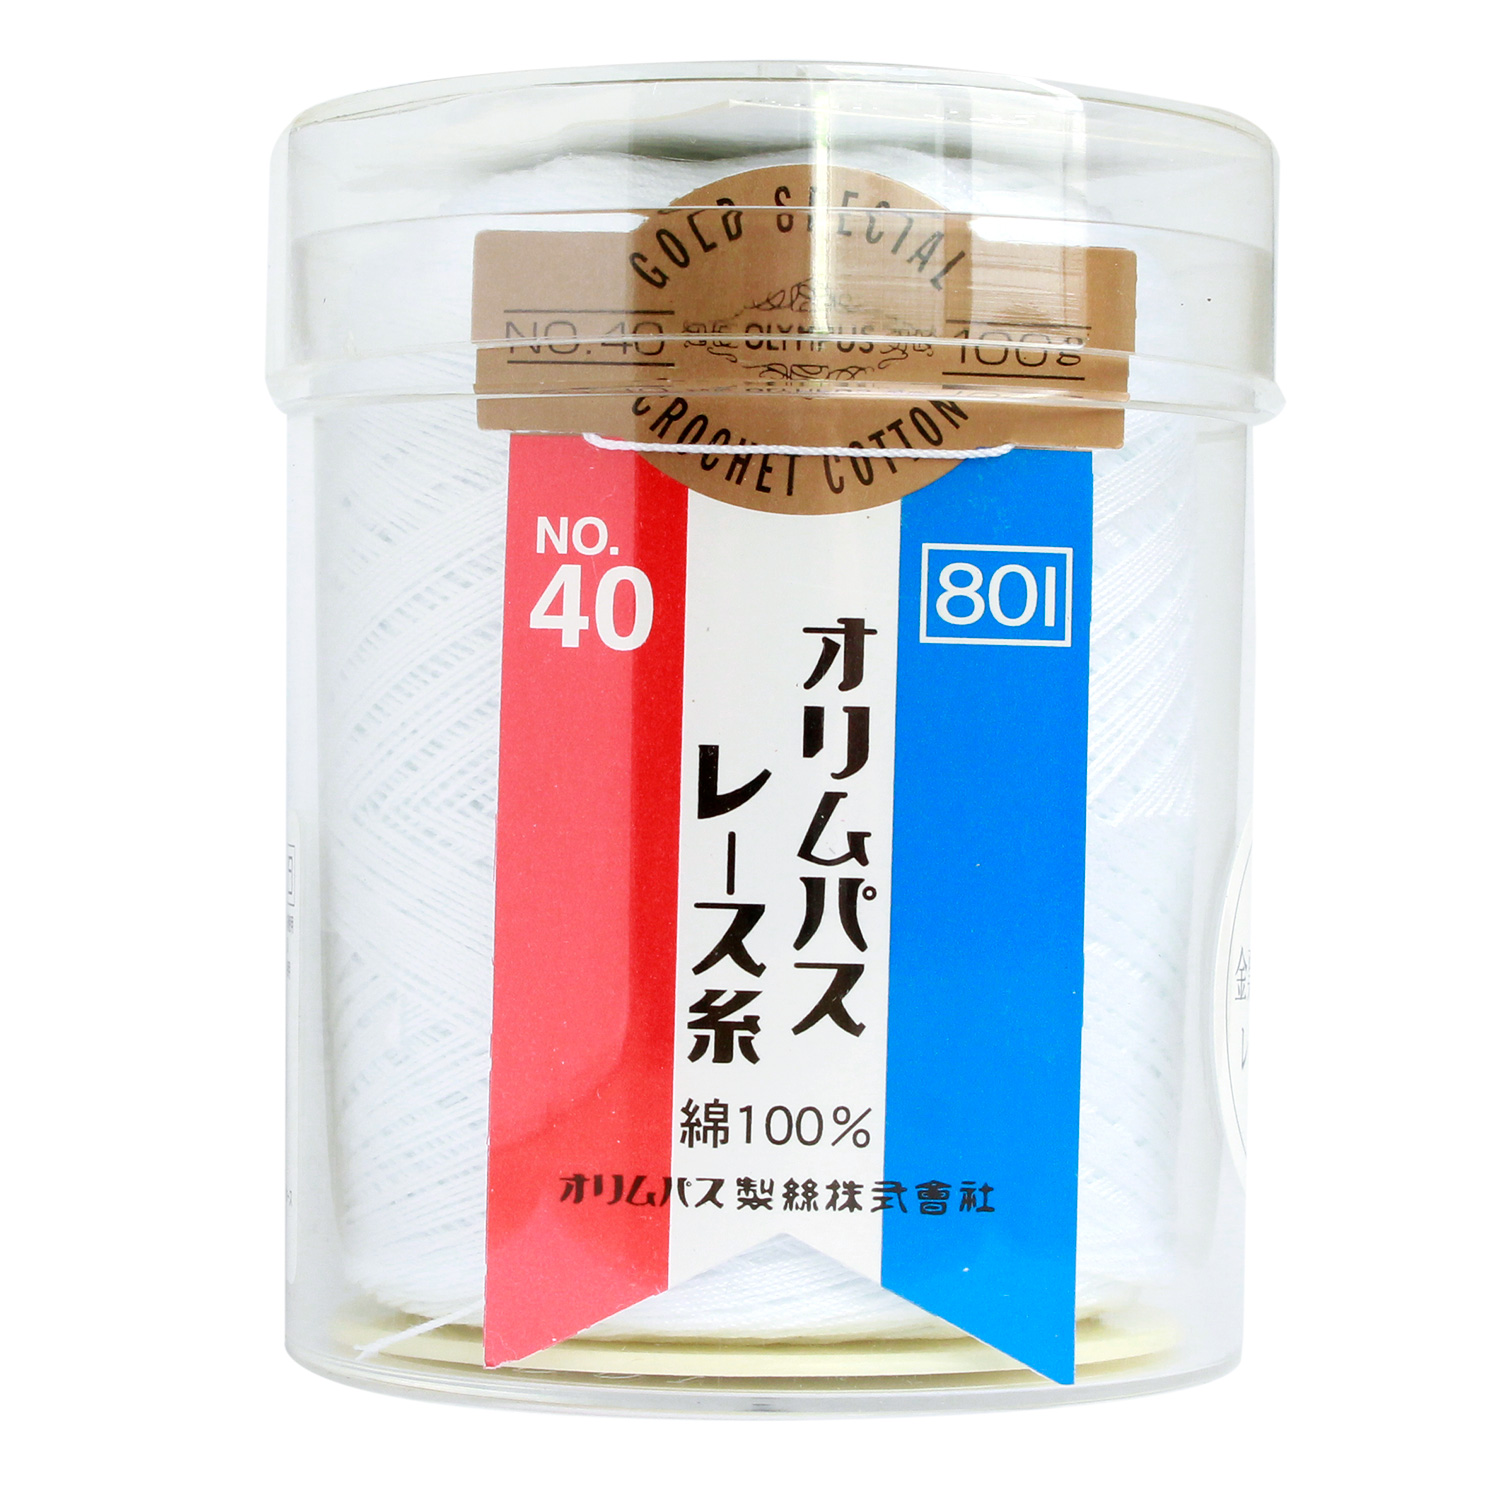 OLY40-100G-801 レース糸 40/100g 白 3玉入 (箱)